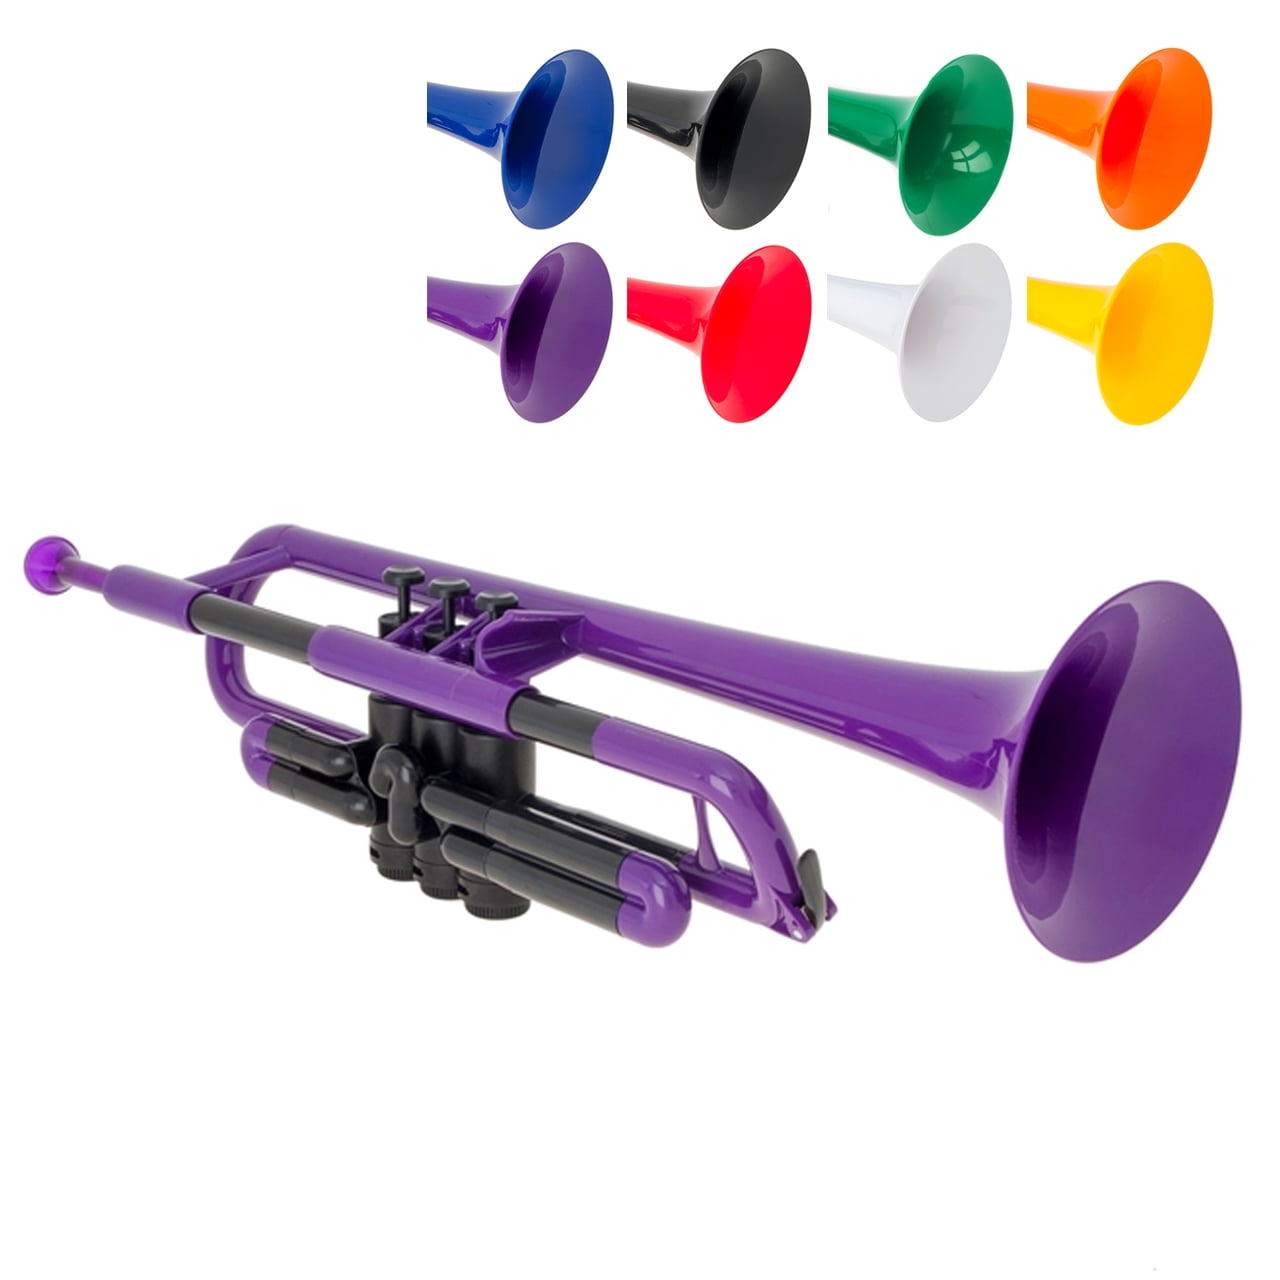 Pbone Plastic Trumpet 2.0, Red - Walmart.com